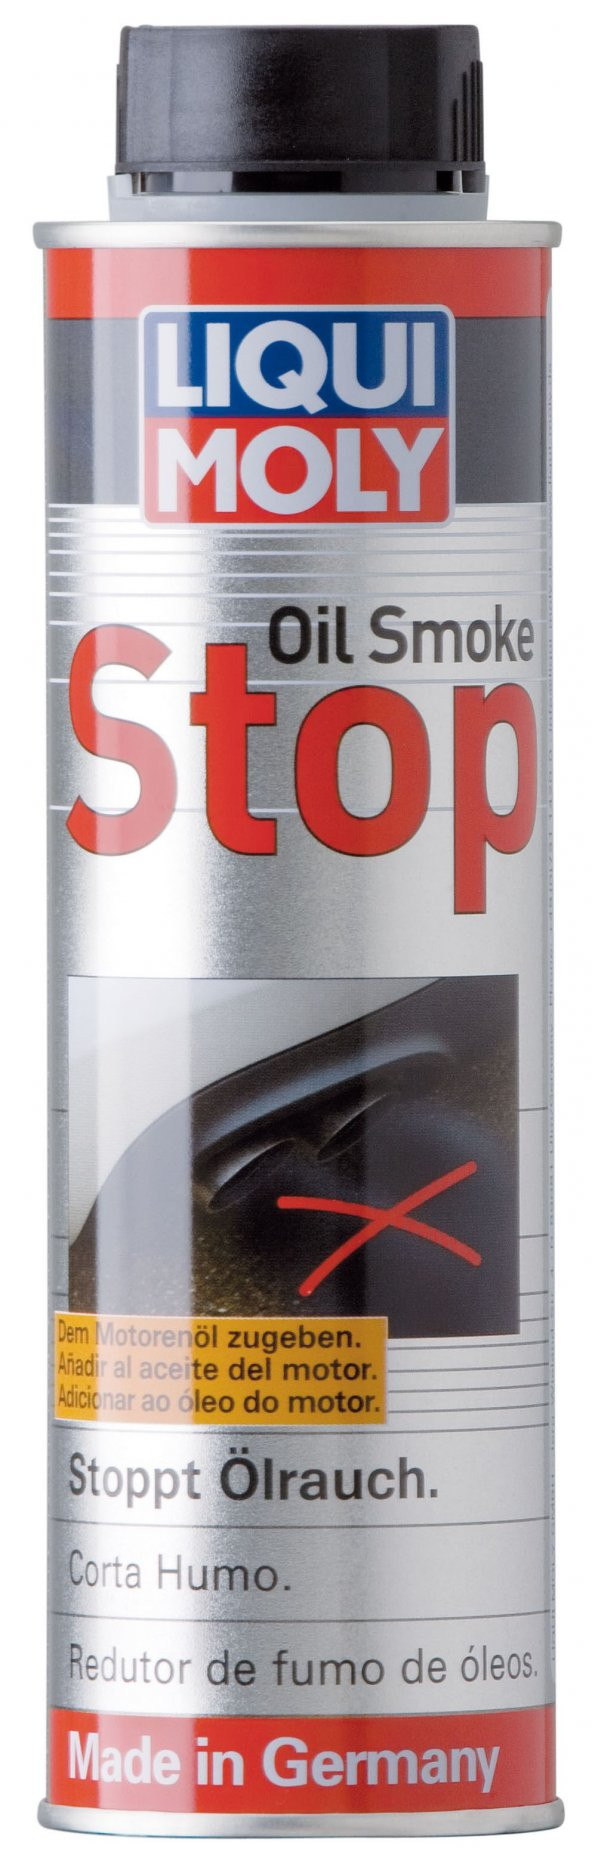 Liqui Moly Oıl Smoke Stop Yağ Duman Önleyici